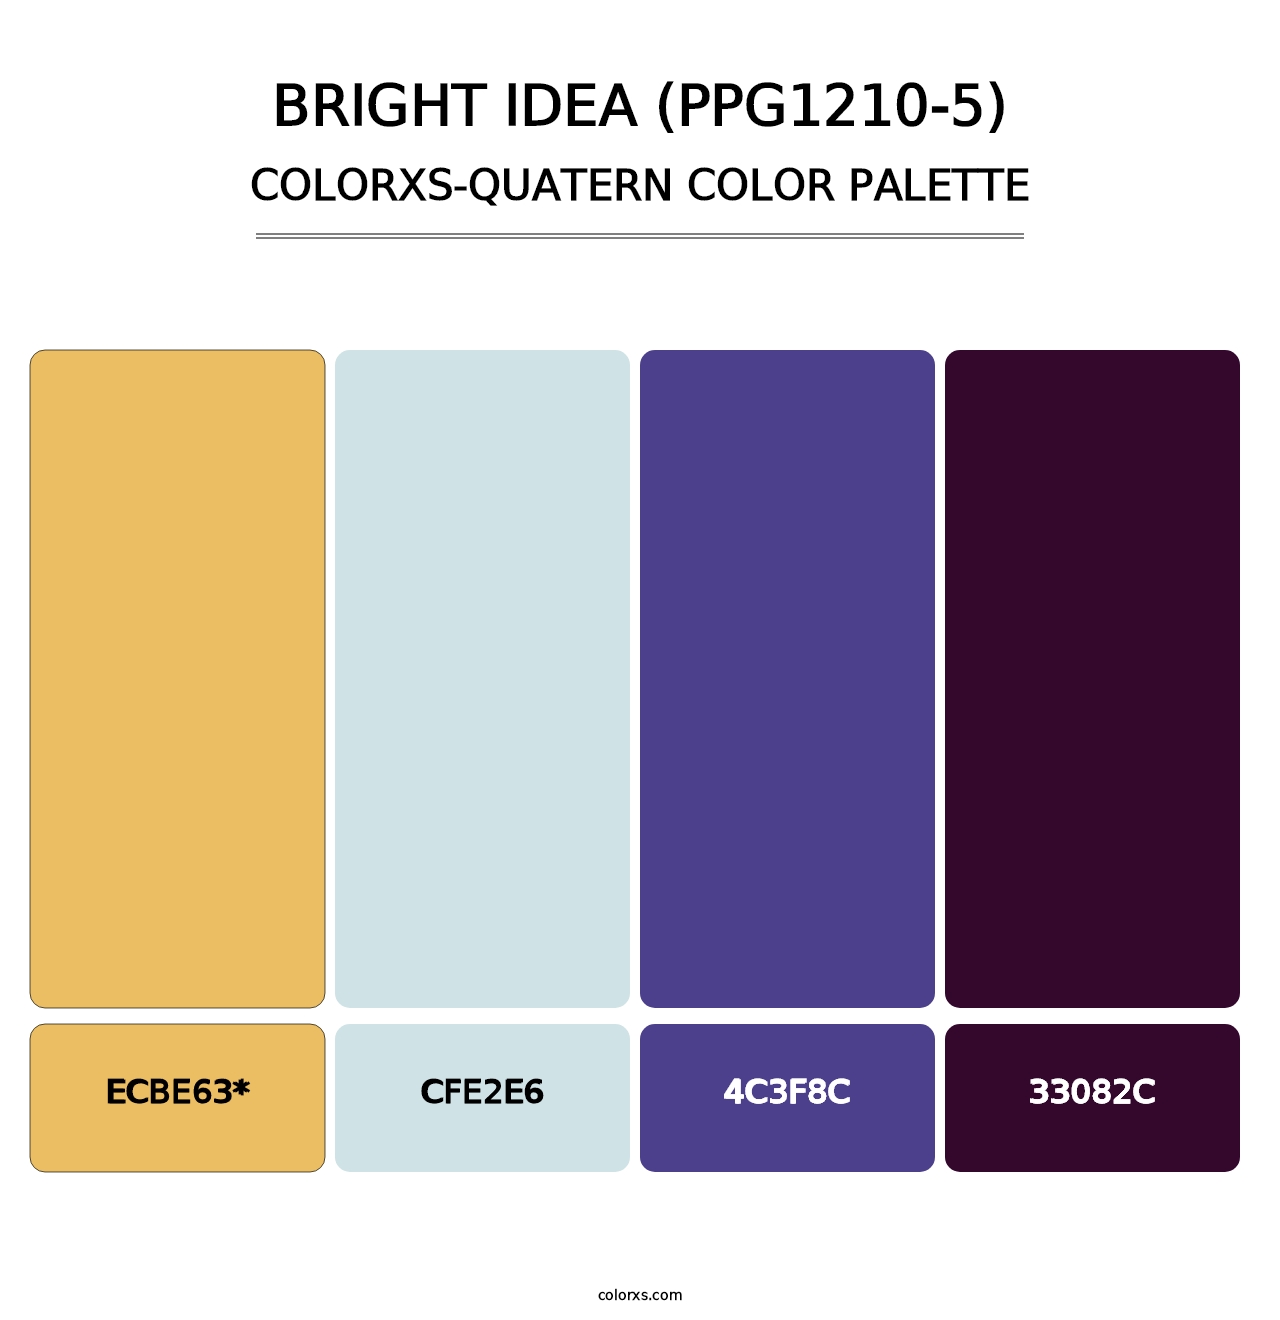 Bright Idea (PPG1210-5) - Colorxs Quatern Palette